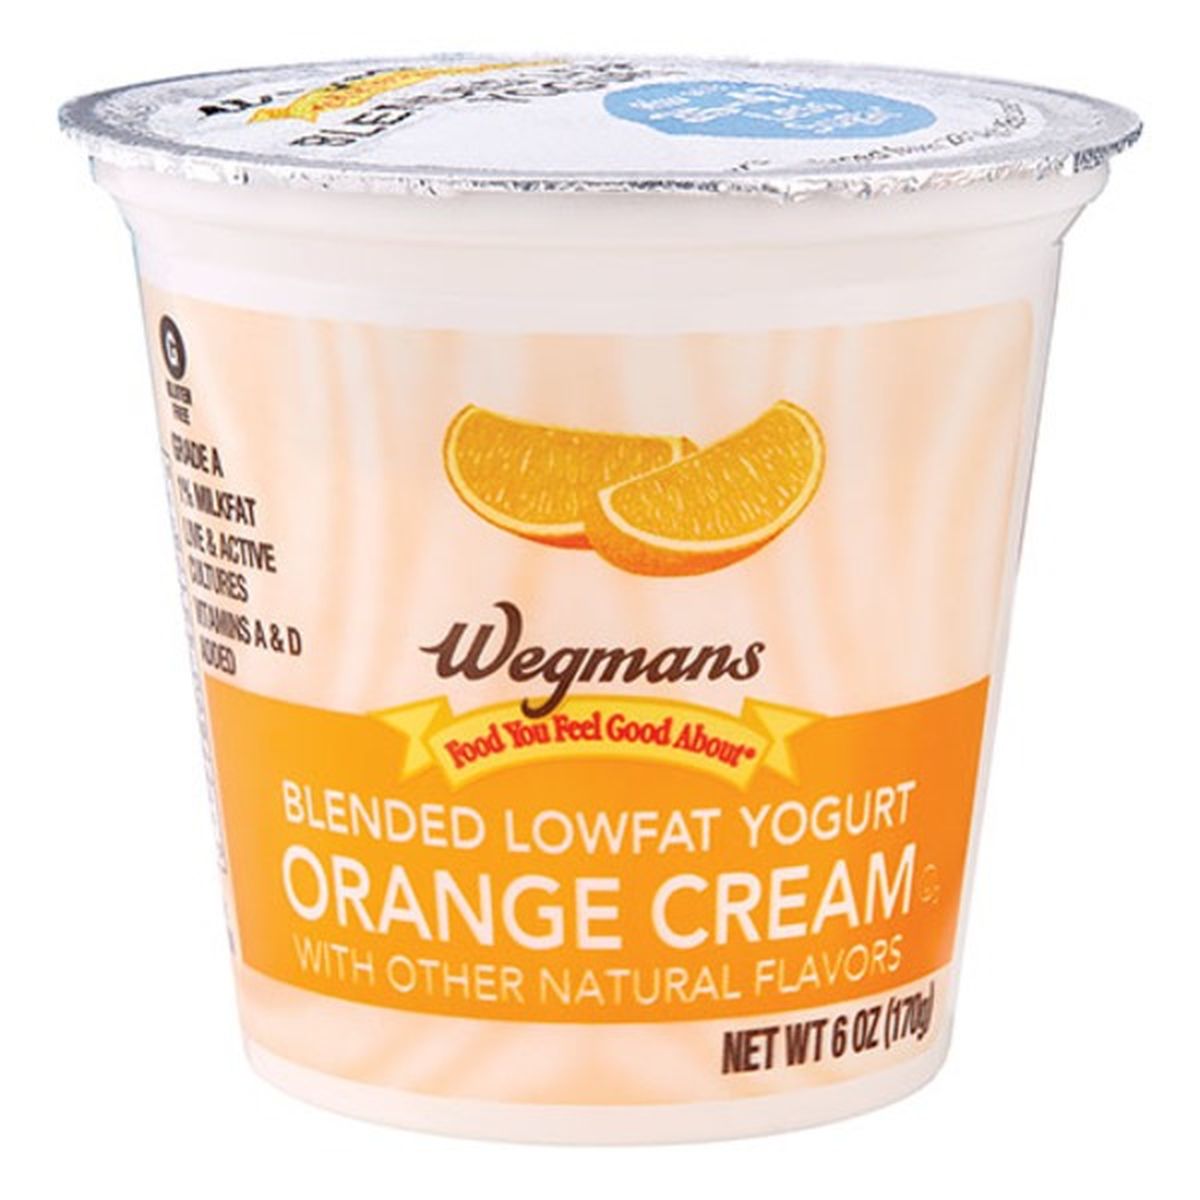 Calories in Wegmans Lowfat Blended Orange Cream Yogurt